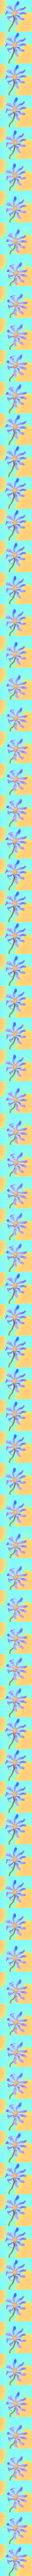 Flirty Dazey Flower #2 3D Animated